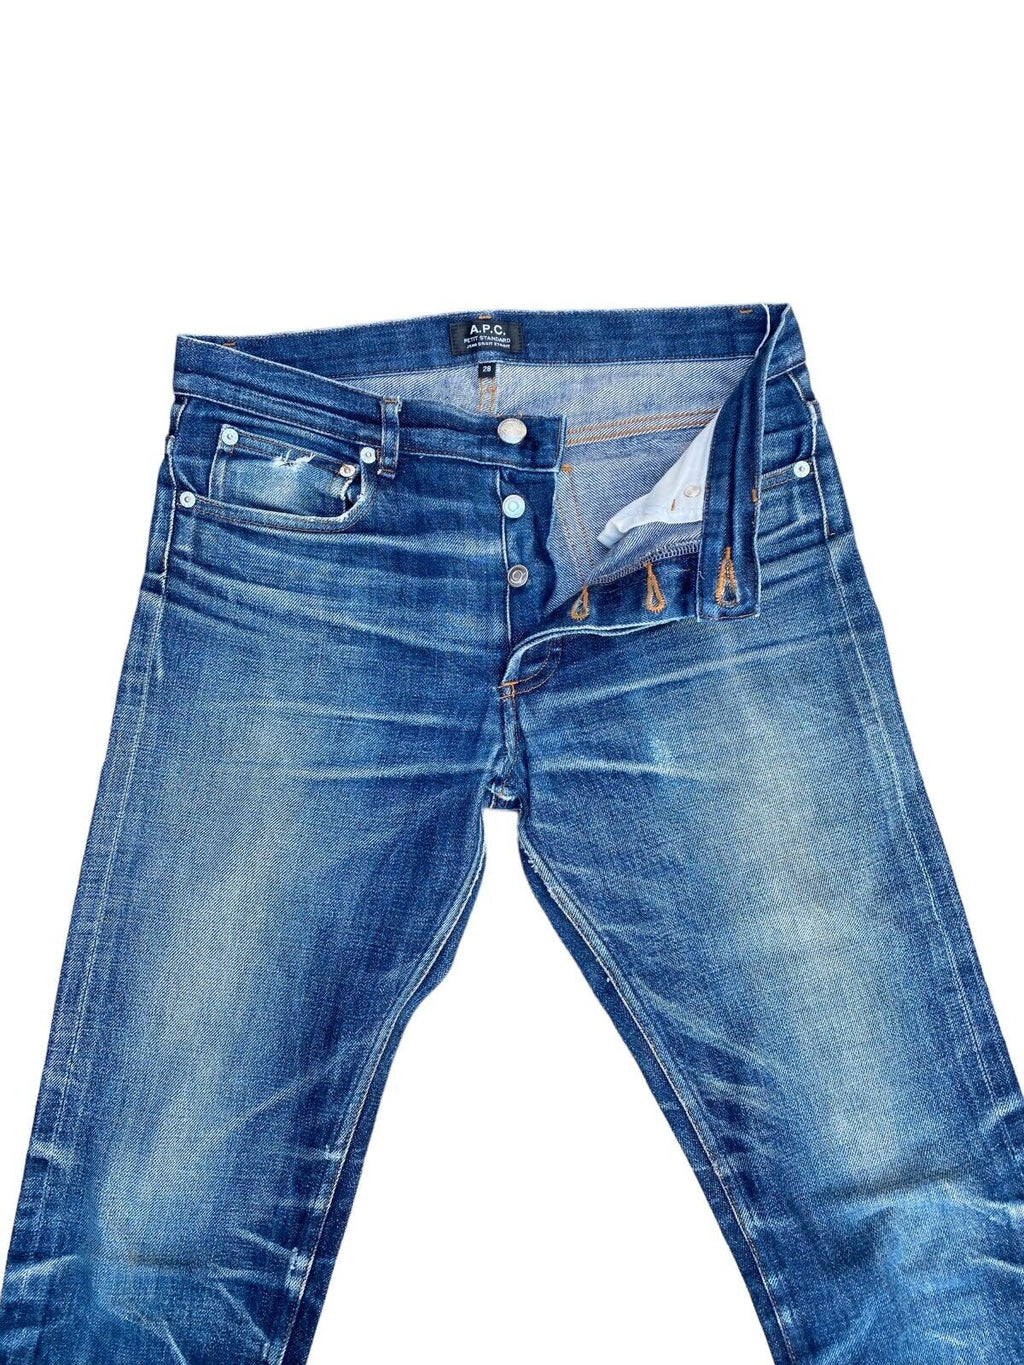 Butler denim jeans Petit Standard